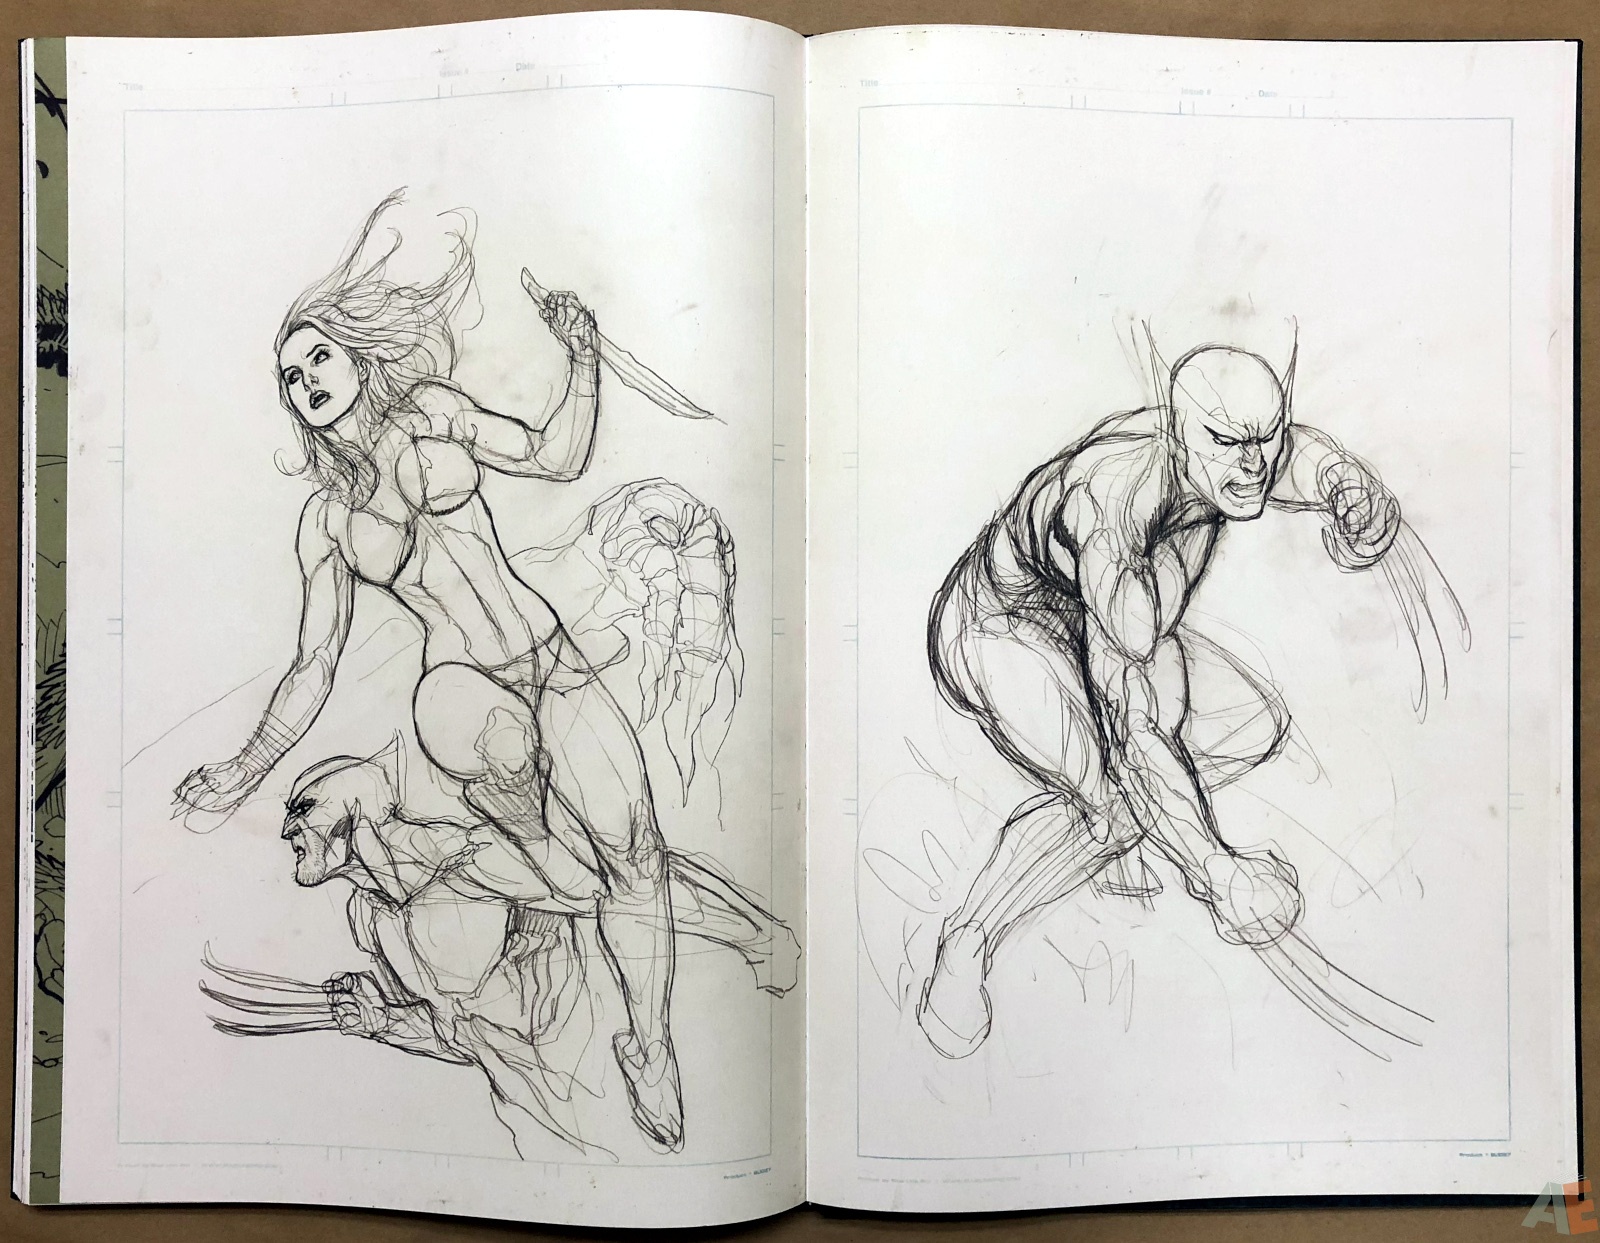 Frank Cho's Savage Wolverine Artist's Edition